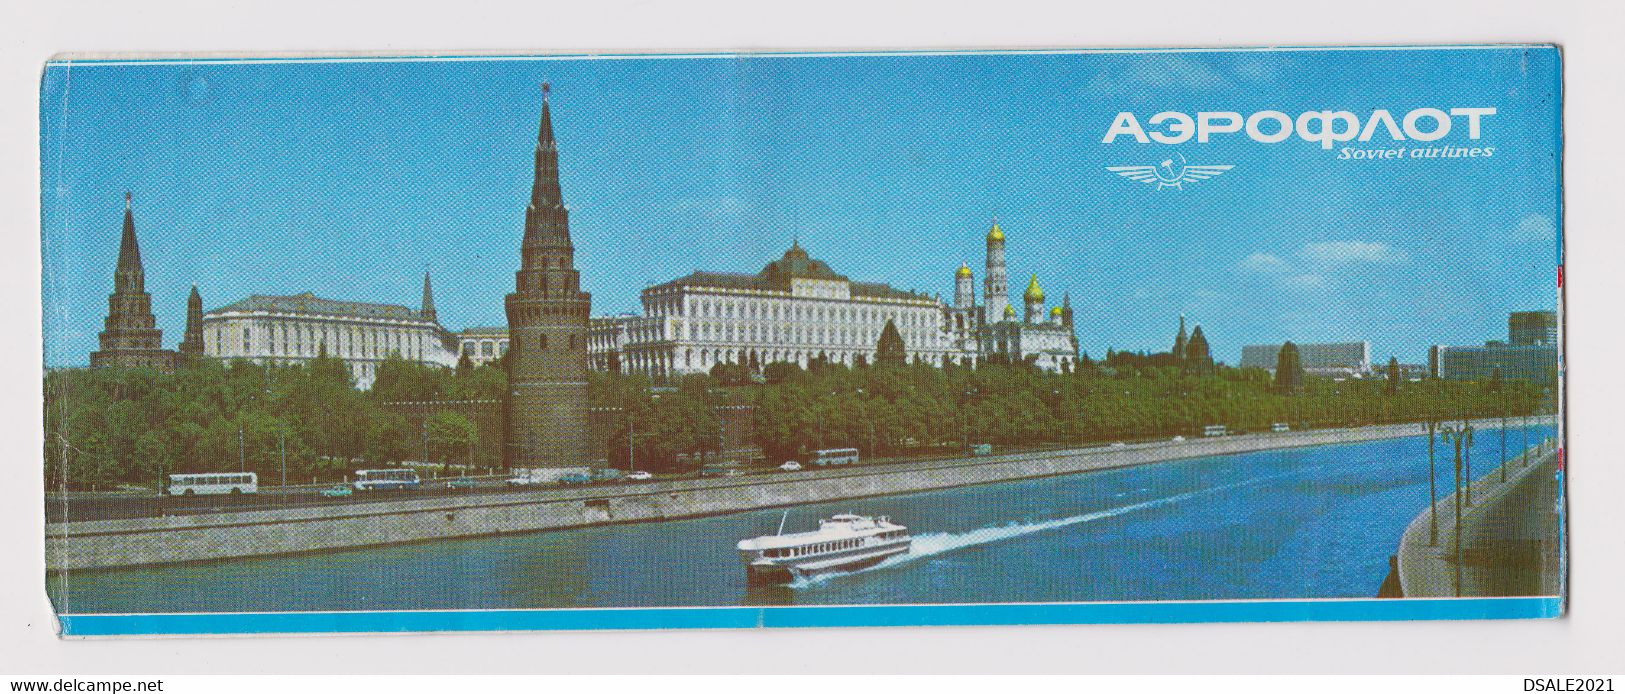 USSR Russia Soviet Union Airlines Airline AEROFLOT Vintage Passenger Ticket 1984 Used (49187) - Billetes